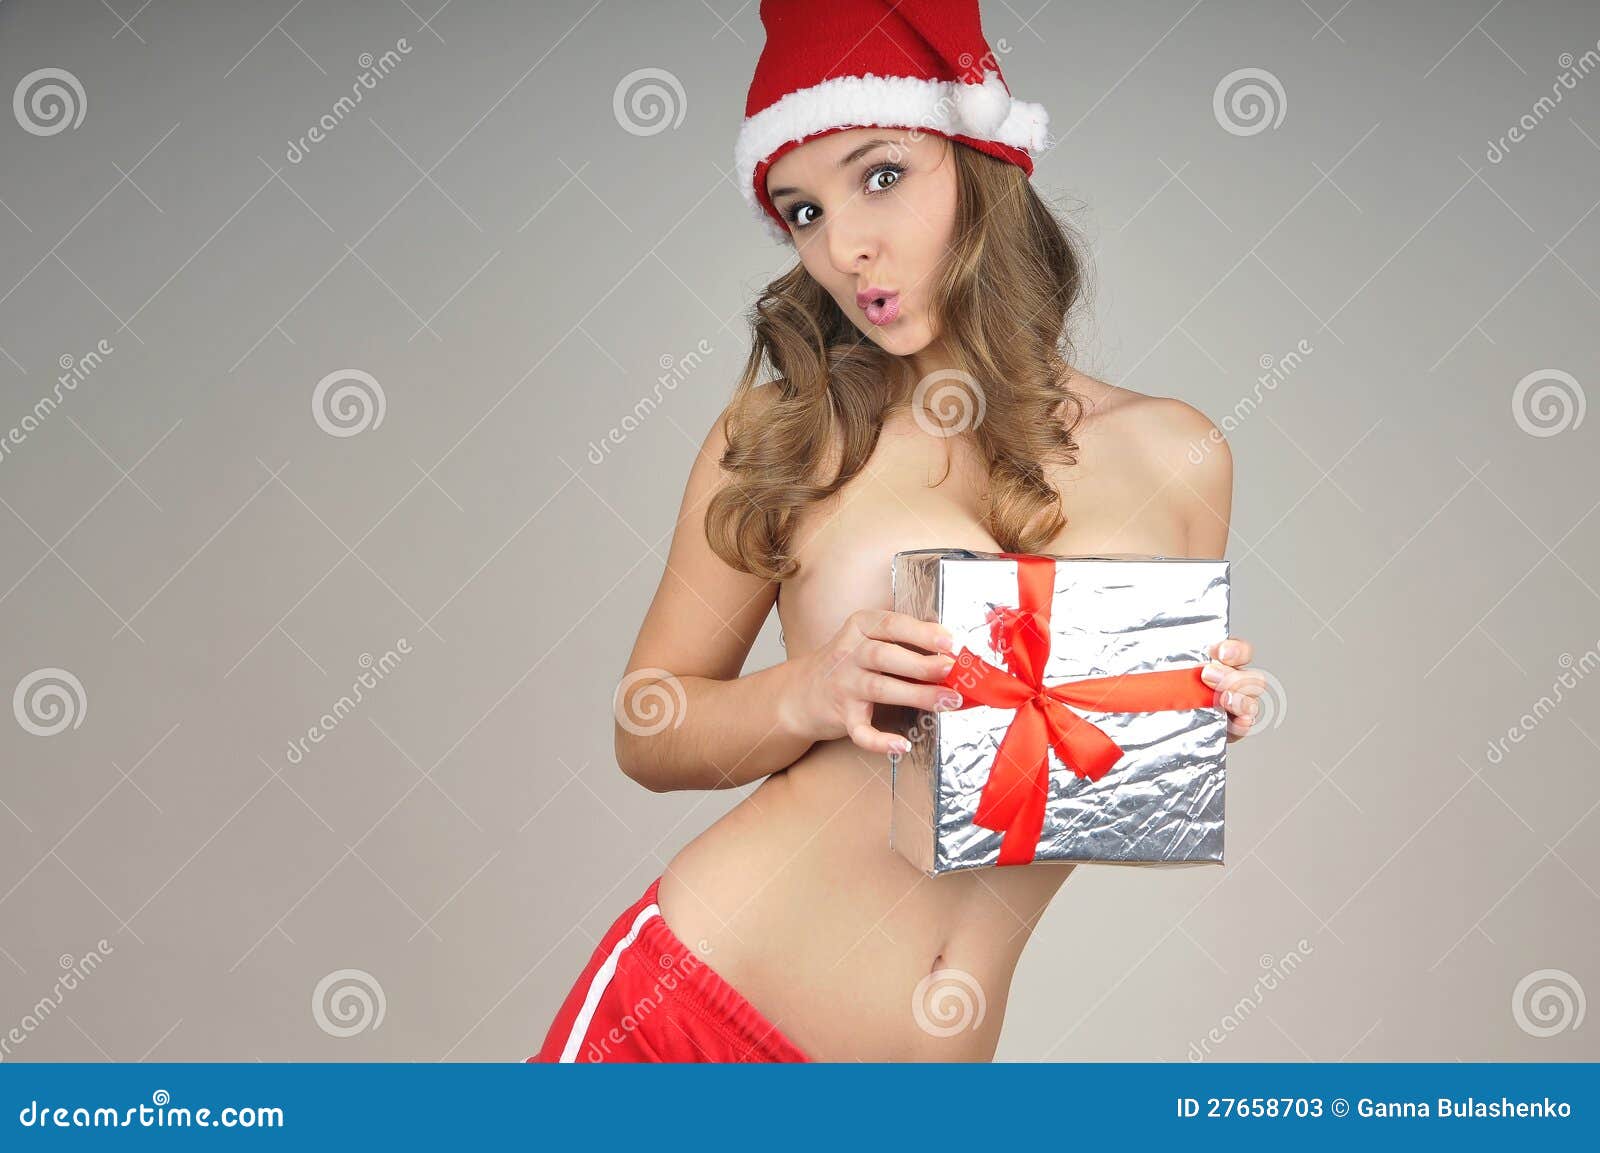 Nude Girls Christmas